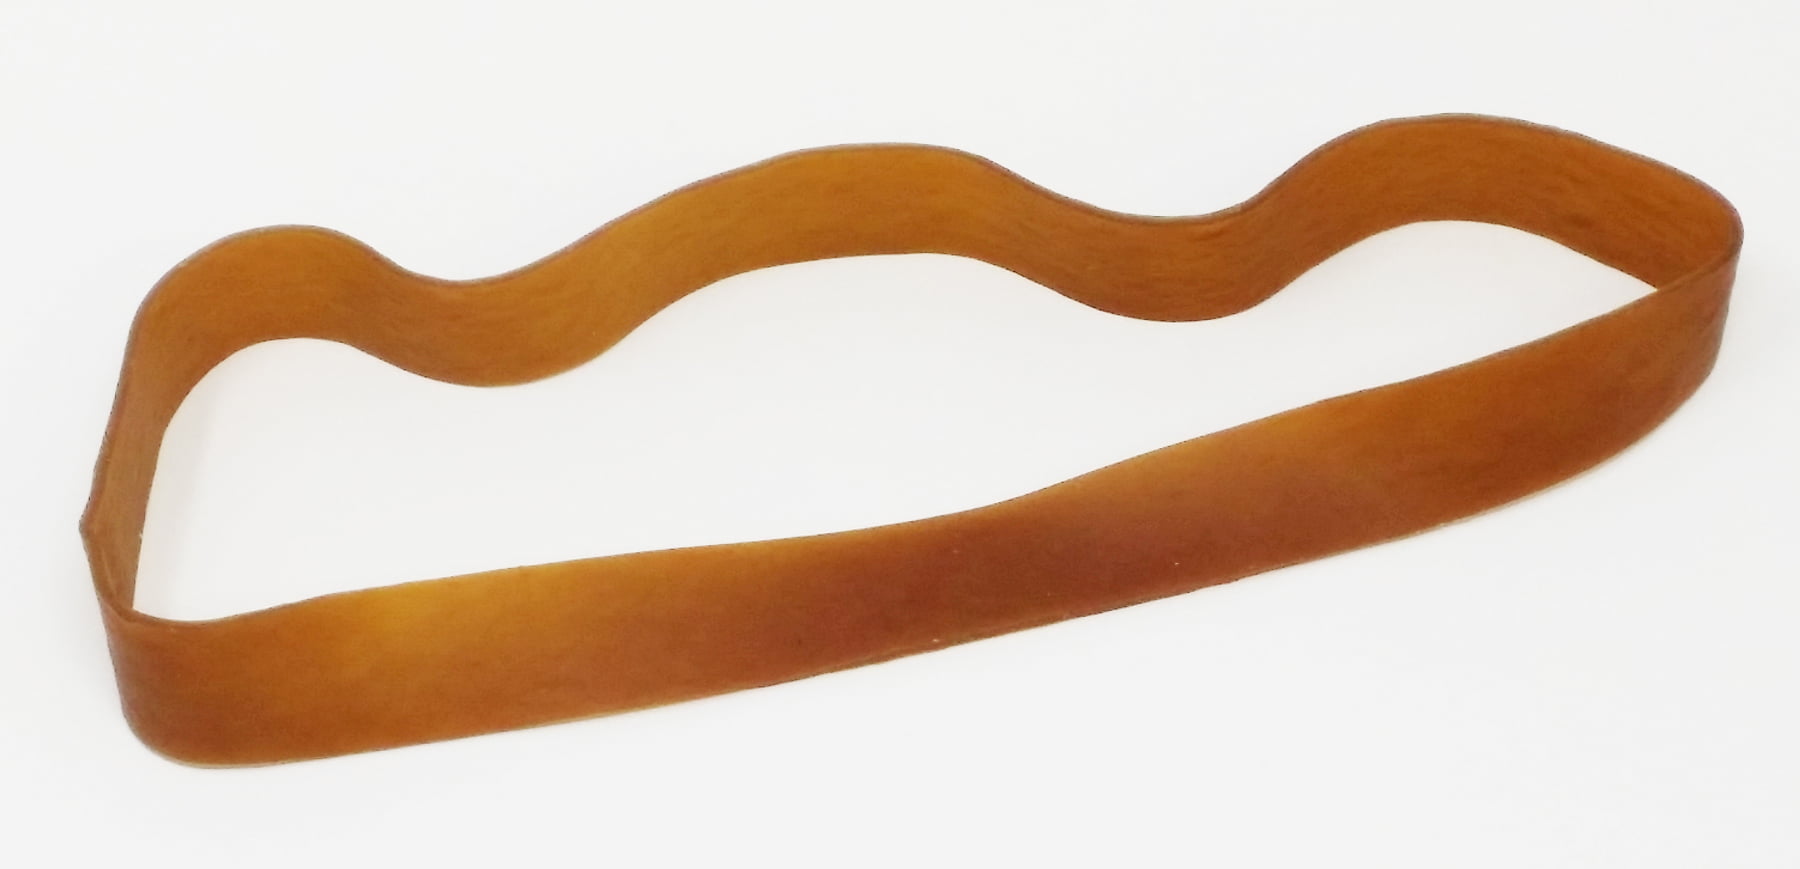 large elastic rubber bands